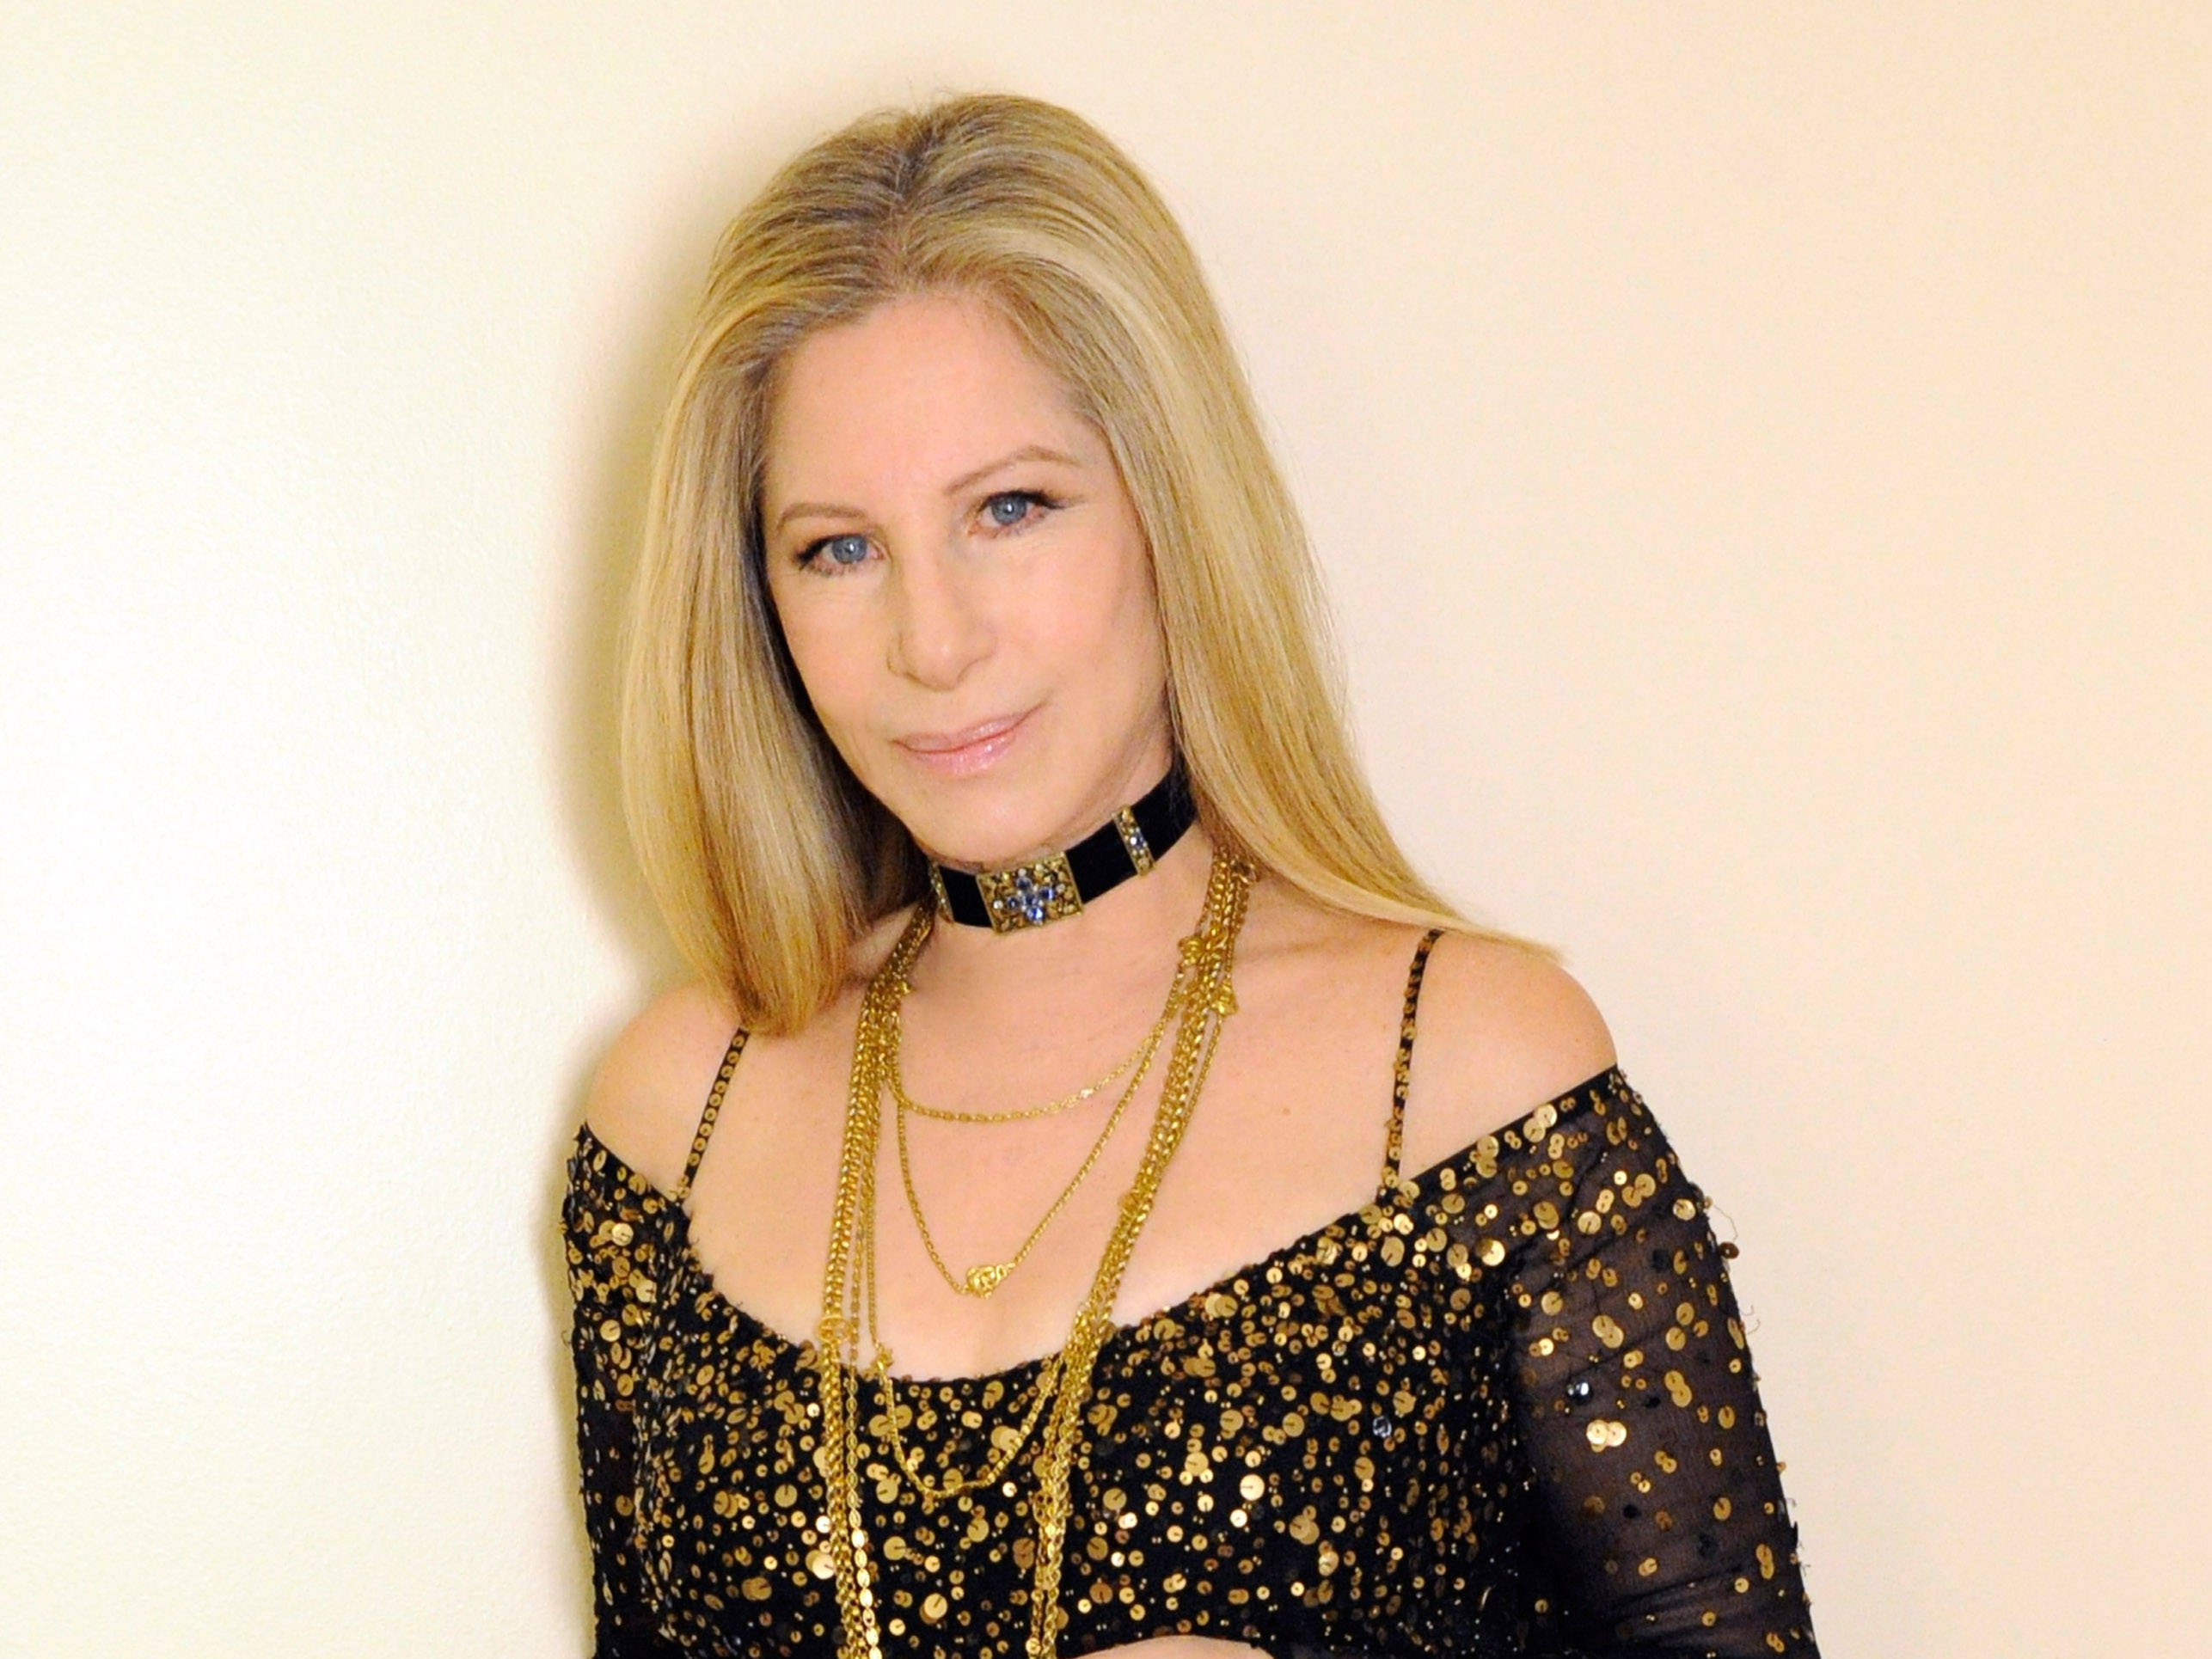 Barbra Streisand Wearing A Black Shiny Dress and choker necklace